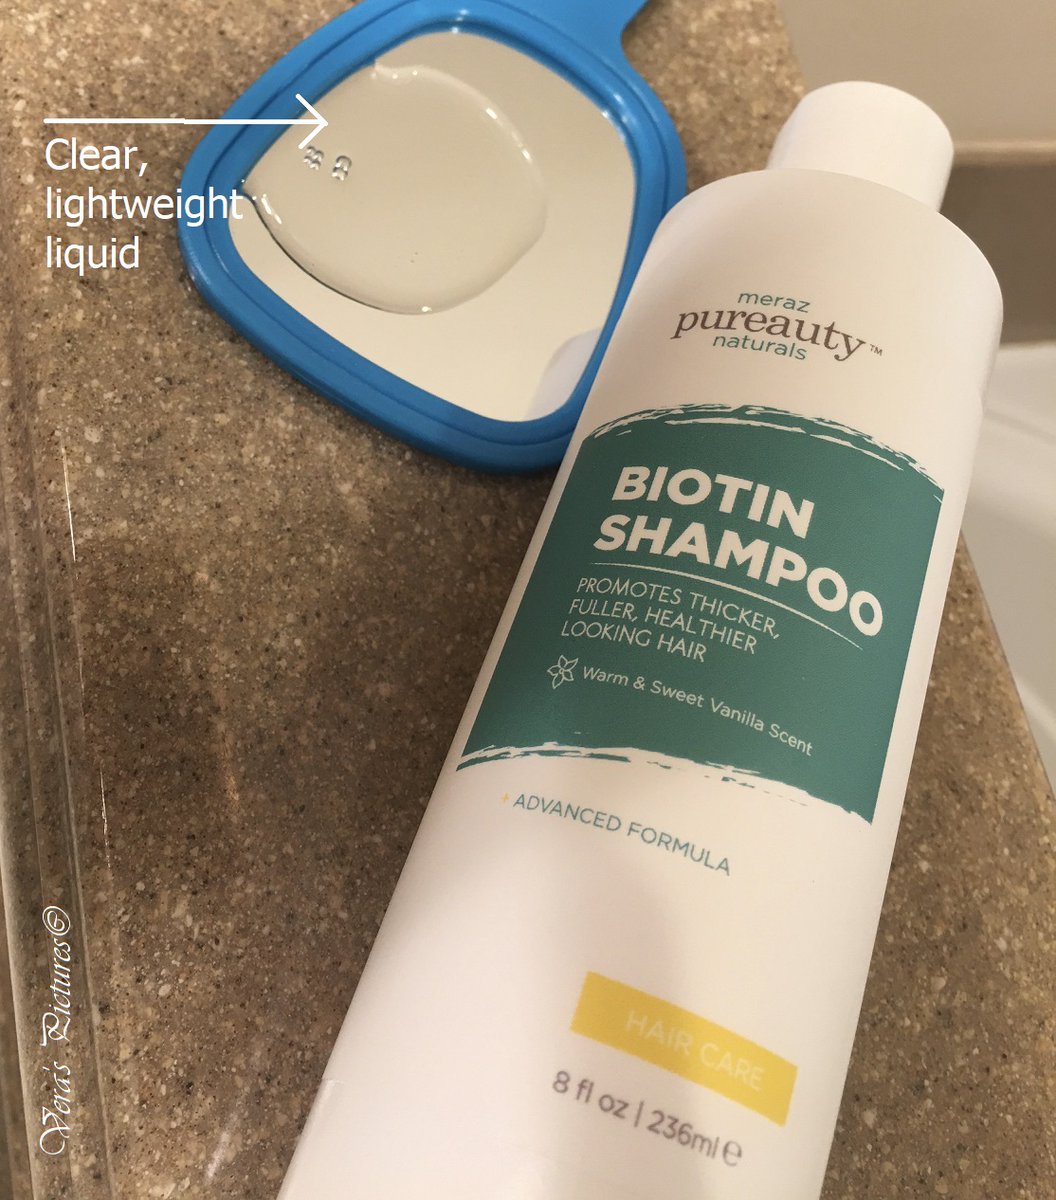 BIOTIN SHAMPOO - thicker, fuller, healthier hair #giveaway

#PureautyNaturals
#mybiotin
Ends 6/5 USA
#WINIT
 rafflecopter.com/rafl/preview/1…